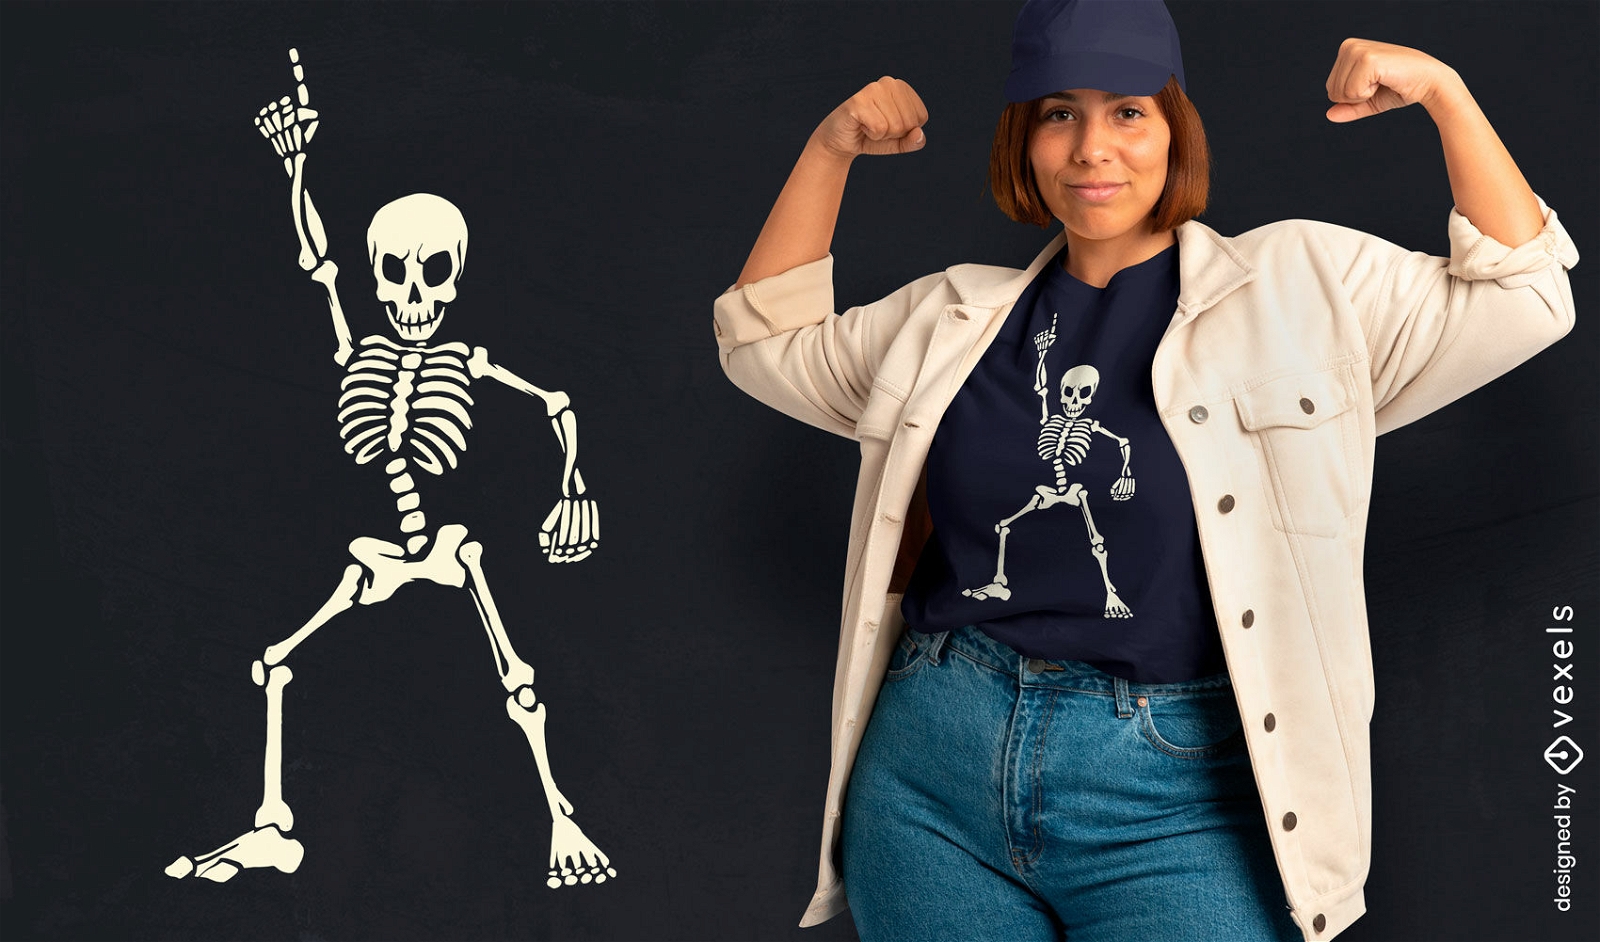 Tanzendes Skelett-T-Shirt-Design im Disco-Stil